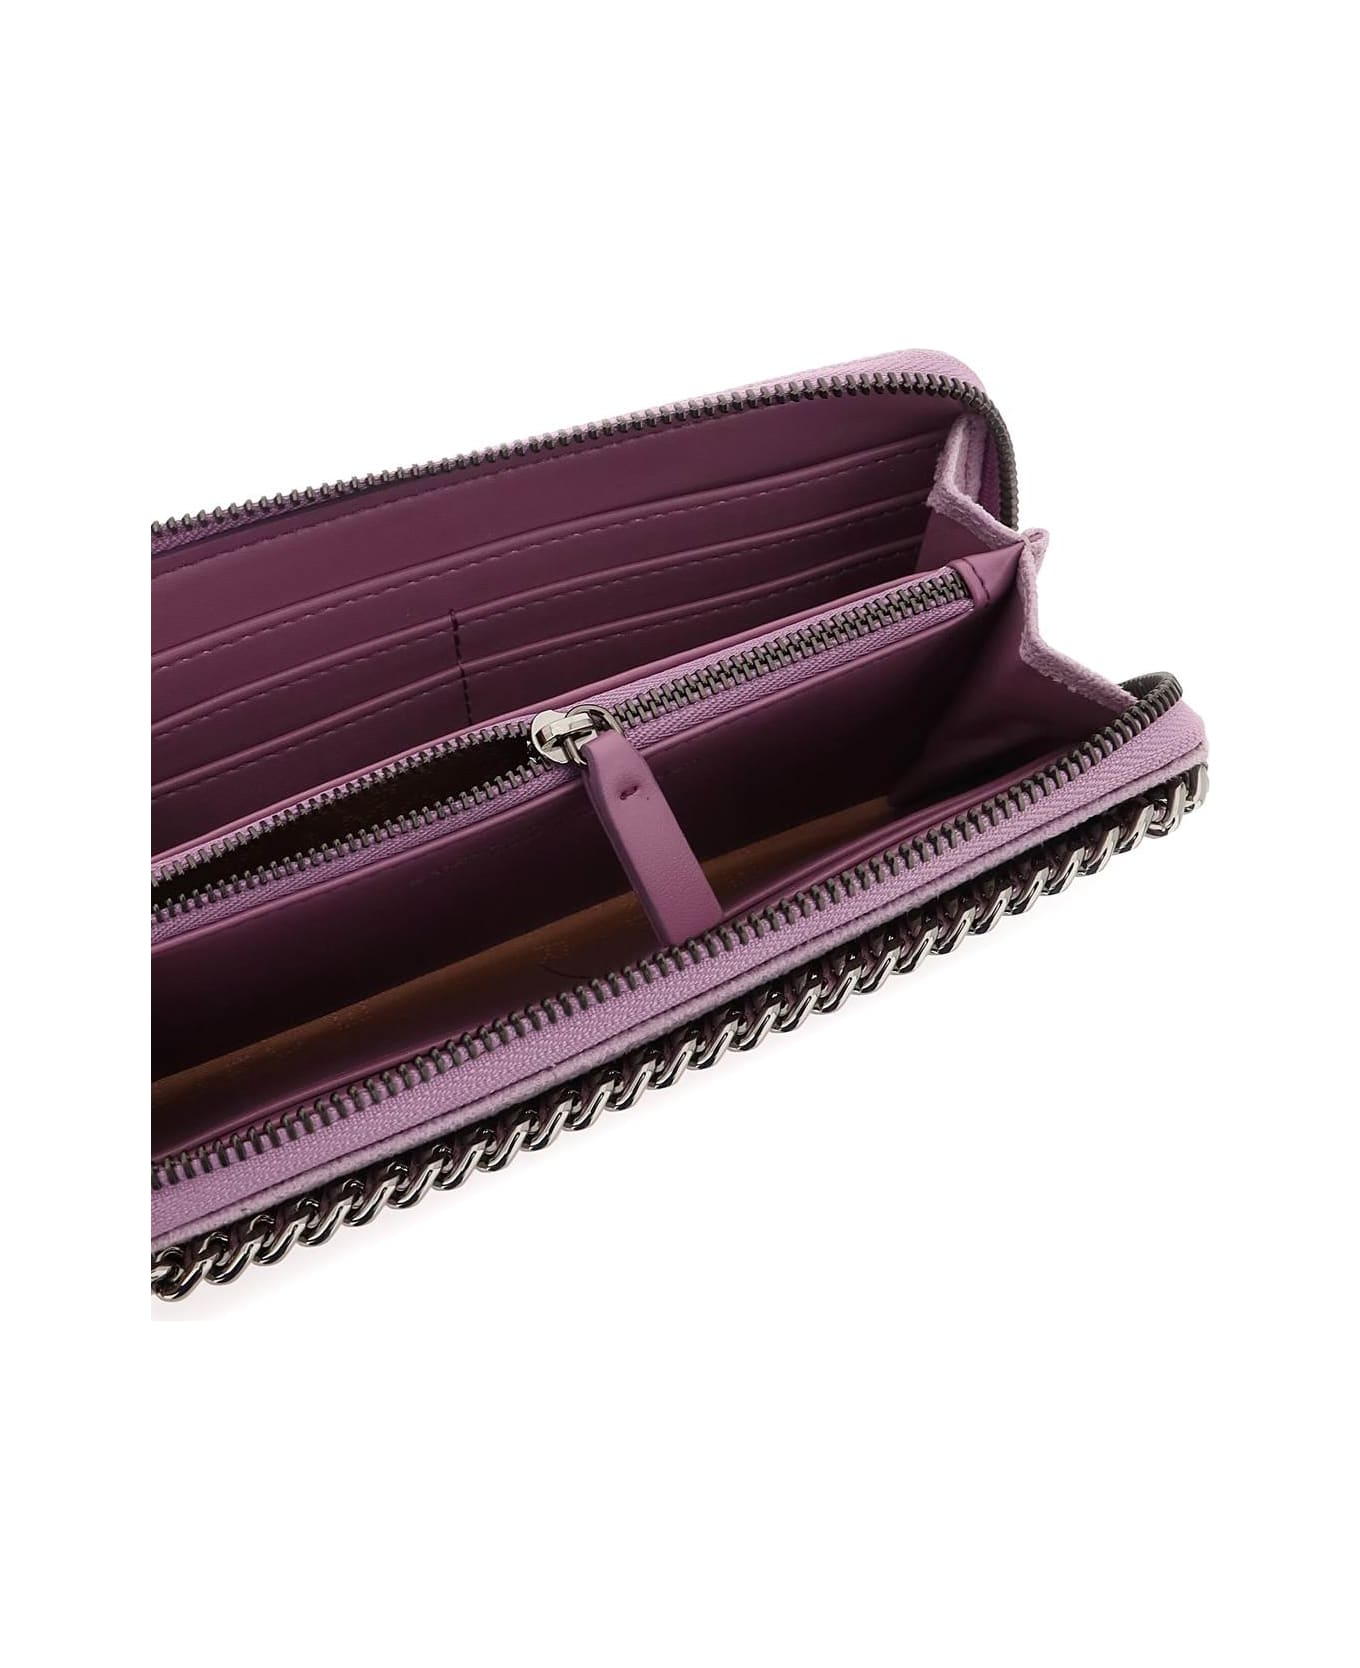 Stella McCartney Falabella Zipped Continental Wallet - LILAC (Purple)